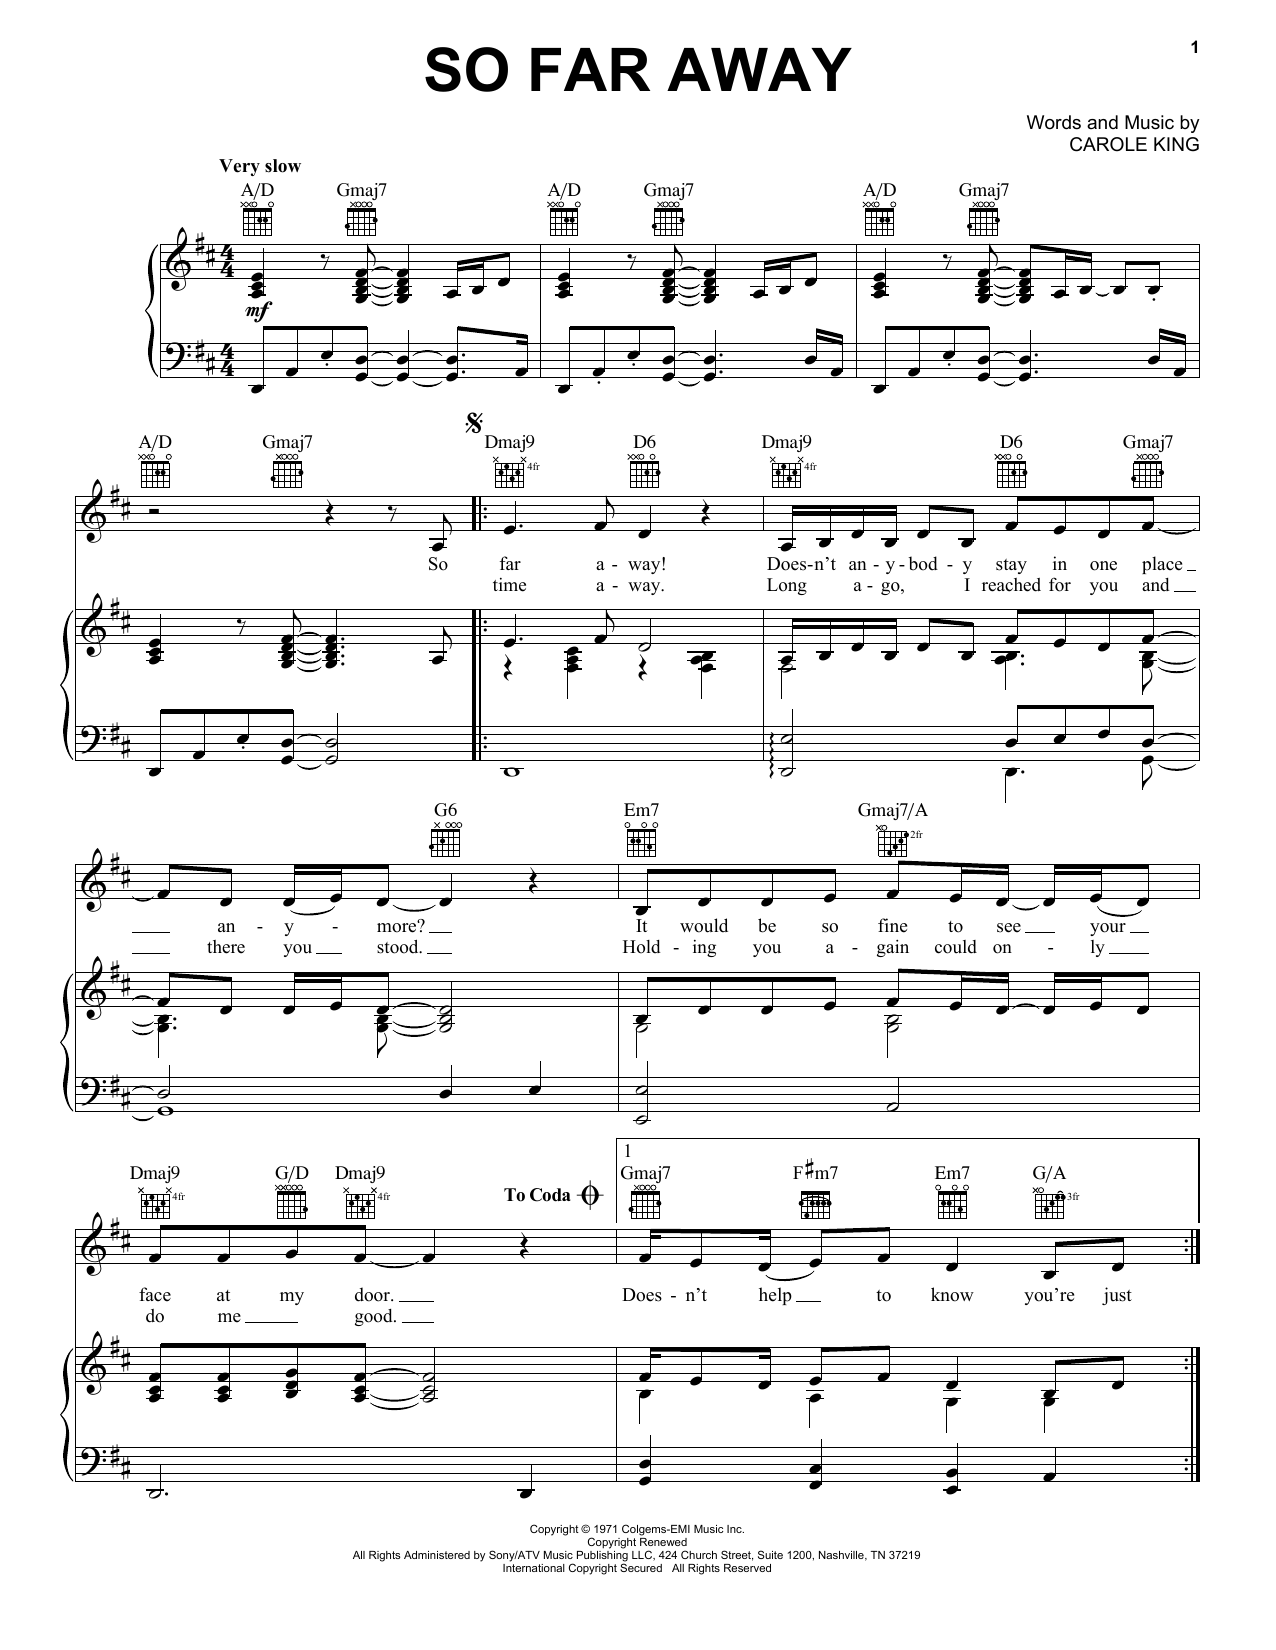 Carole King So Far Away Sheet Music Notes & Chords for Piano (Big Notes) - Download or Print PDF